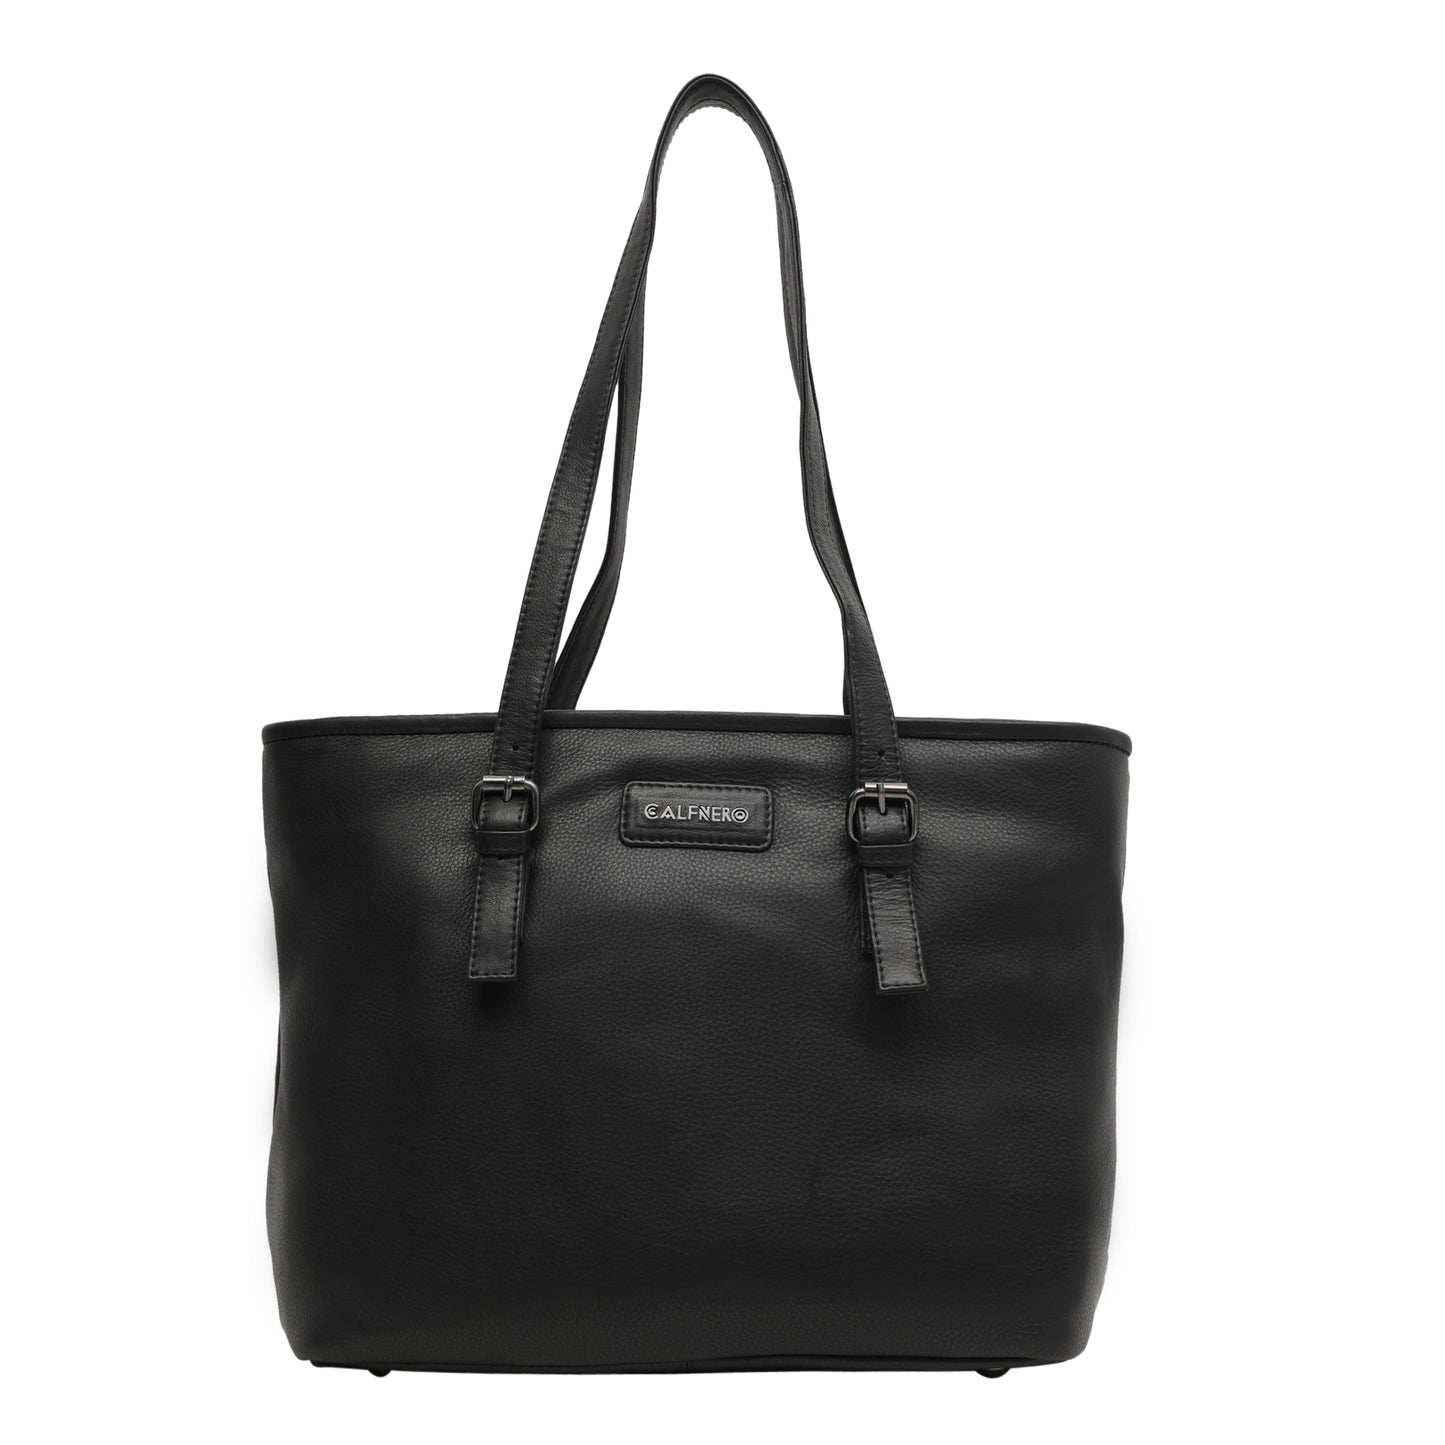 Calfnero Women's Genuine Leather Shoulder Bag (CON-3-Black)